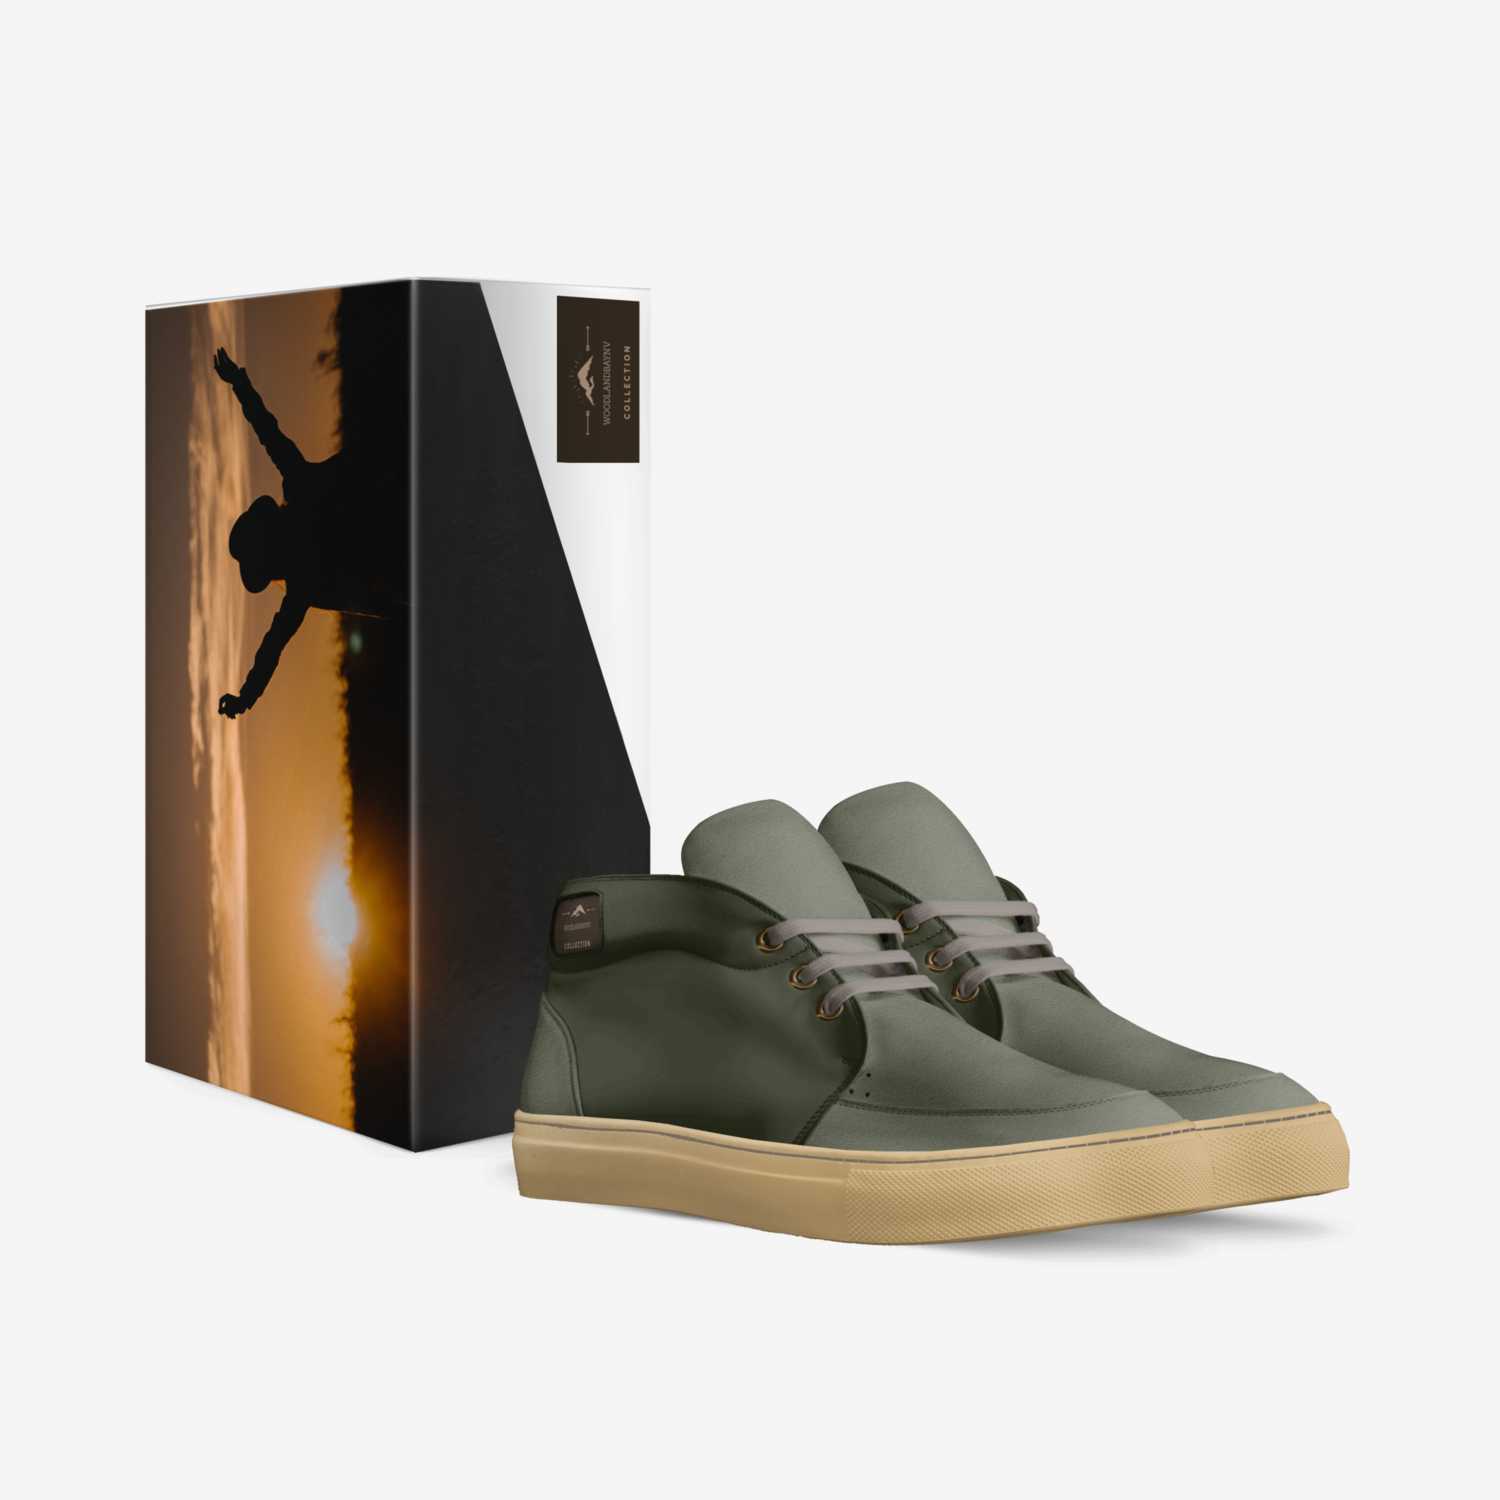 WoodlandBayNv  custom made in Italy shoes by Pamela Martin | Box view